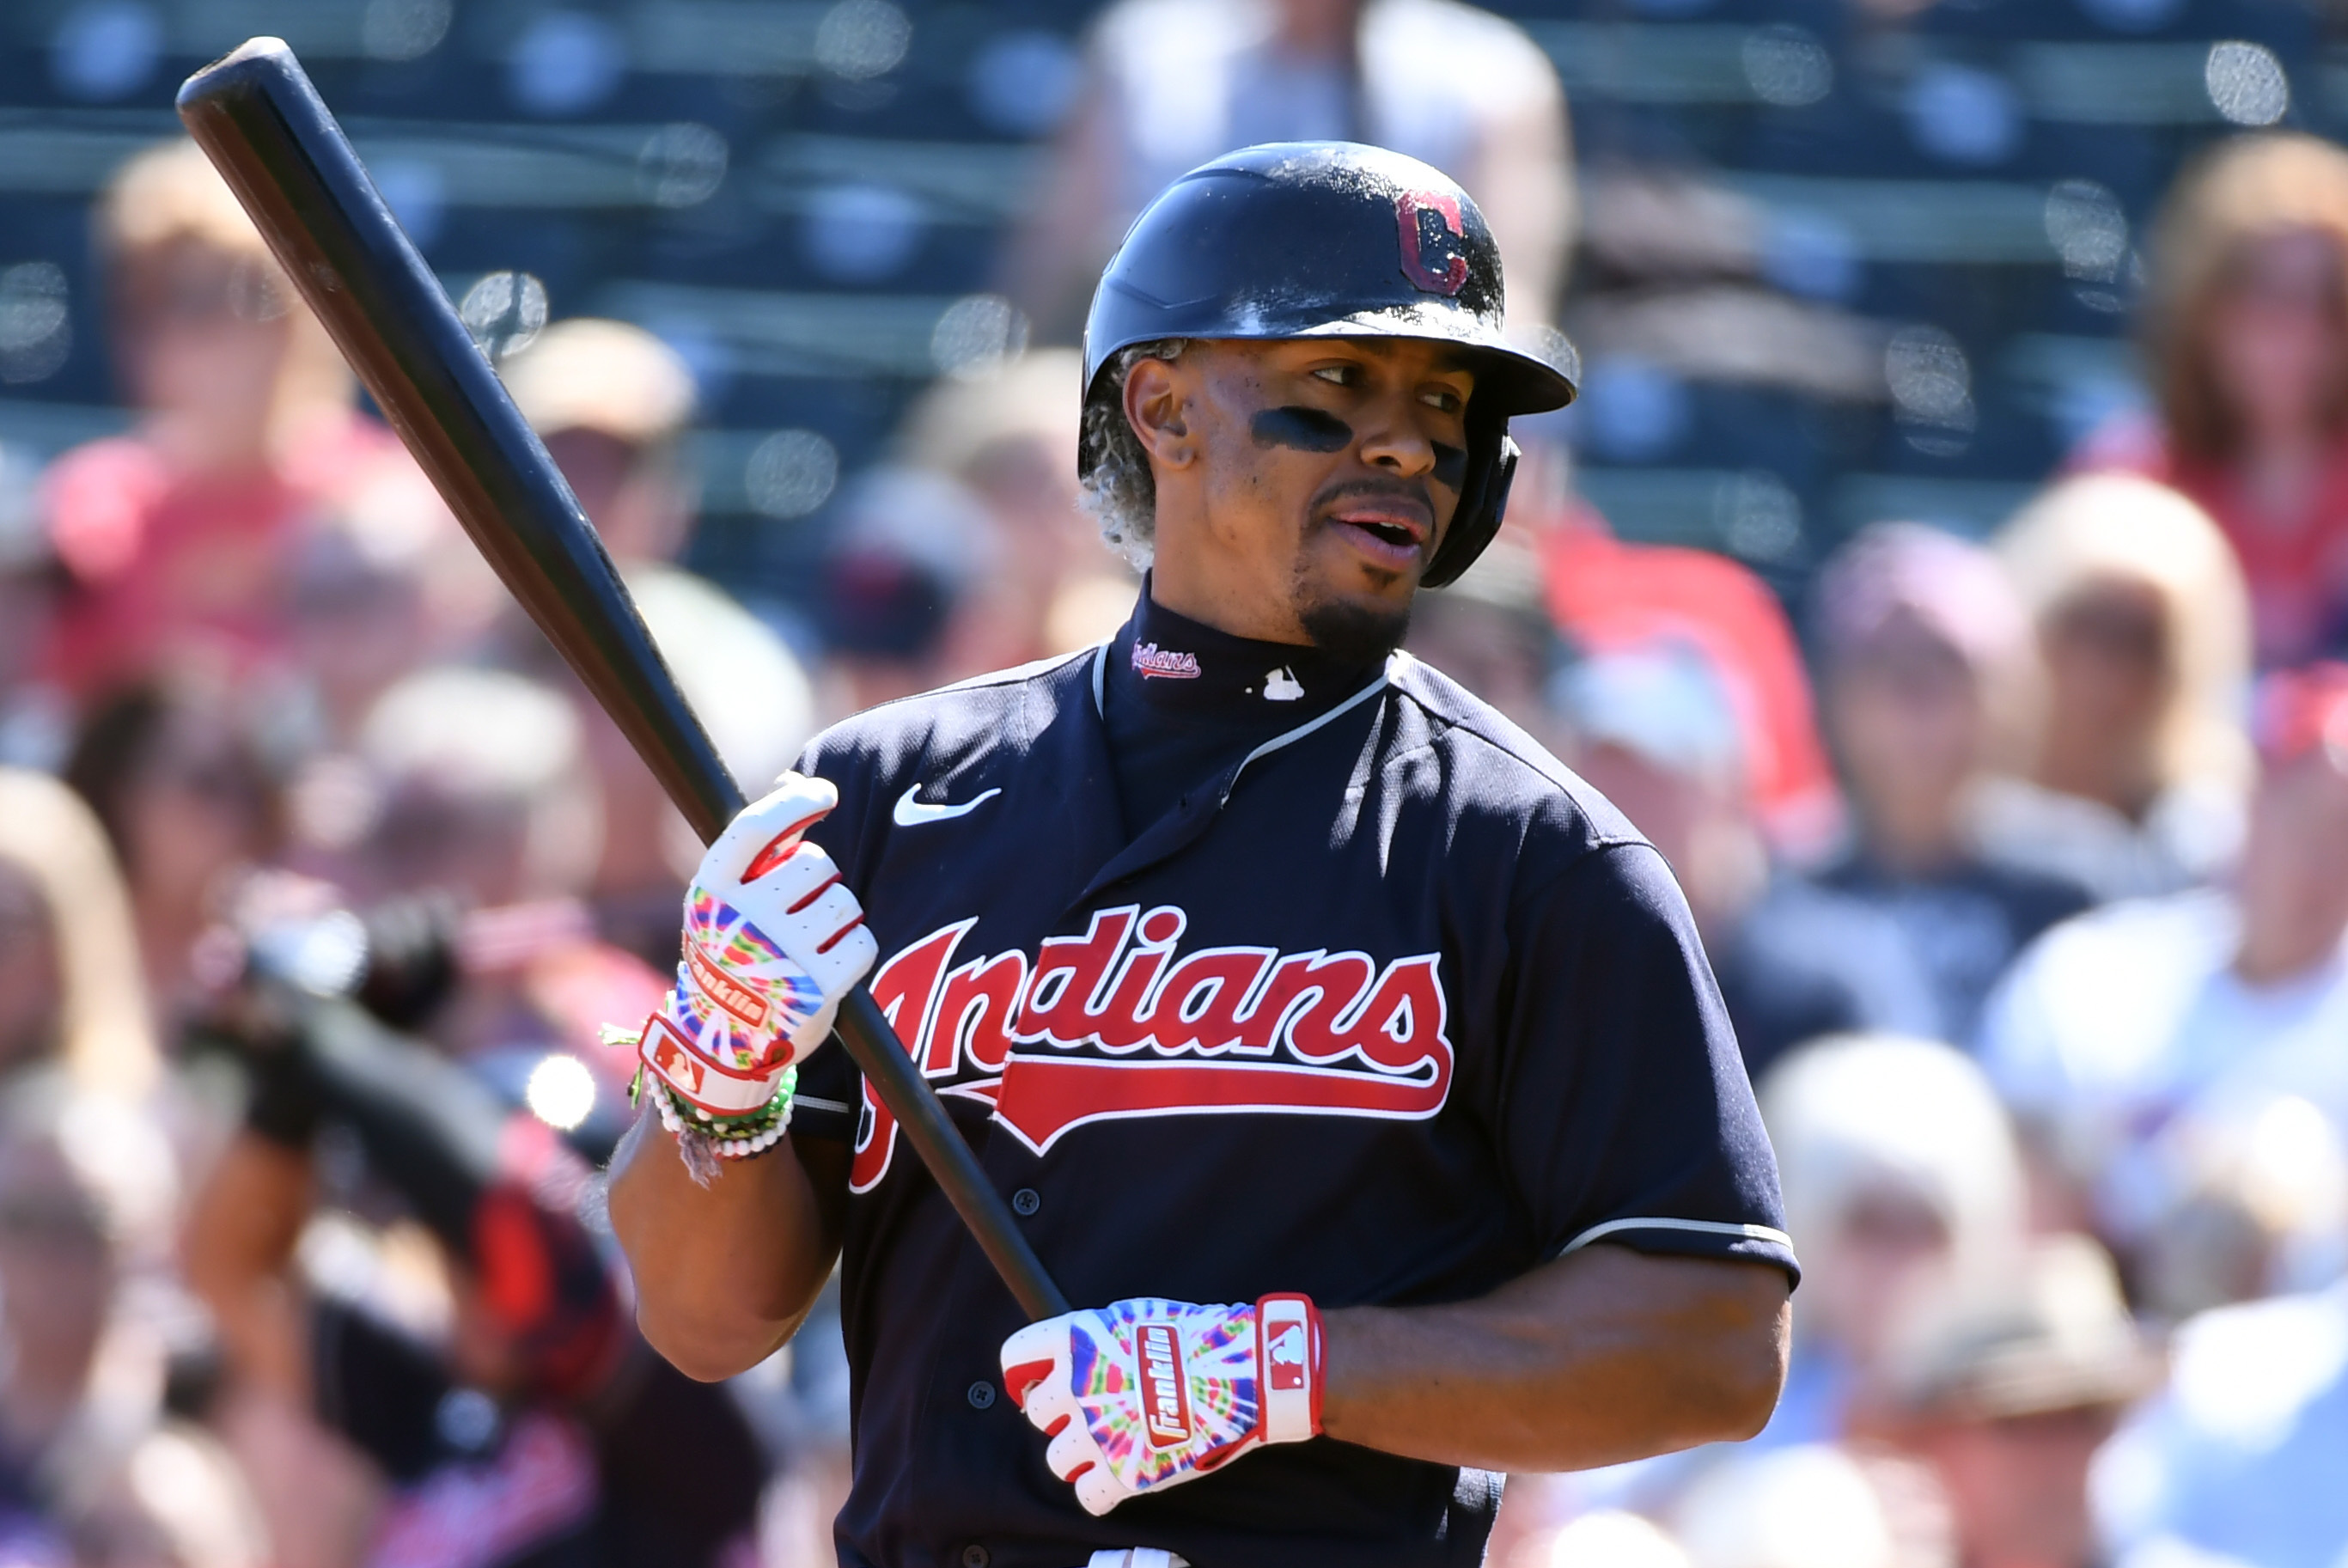 Francisco Lindor gets call to Indians; latest elite MLB prospect promoted